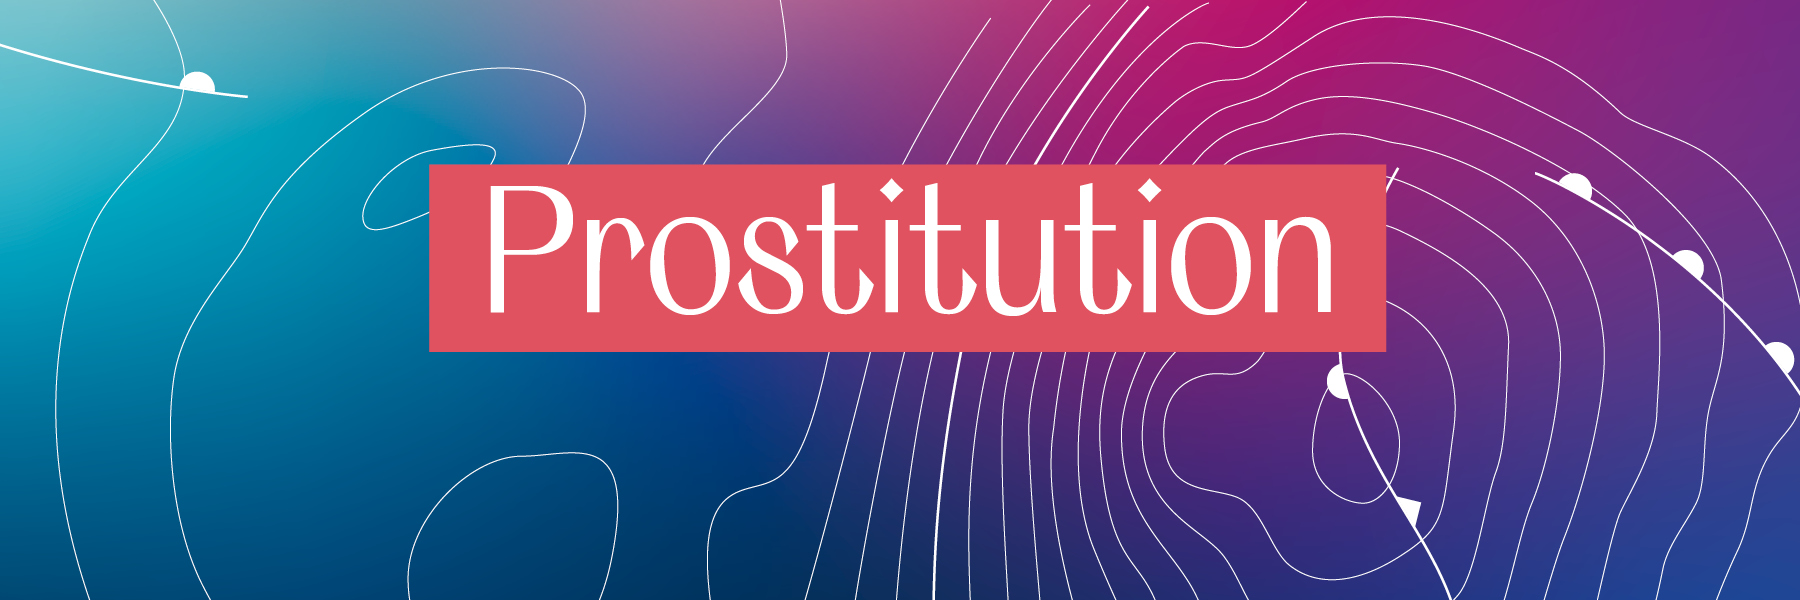 FES Gender Glossar - Prostitution